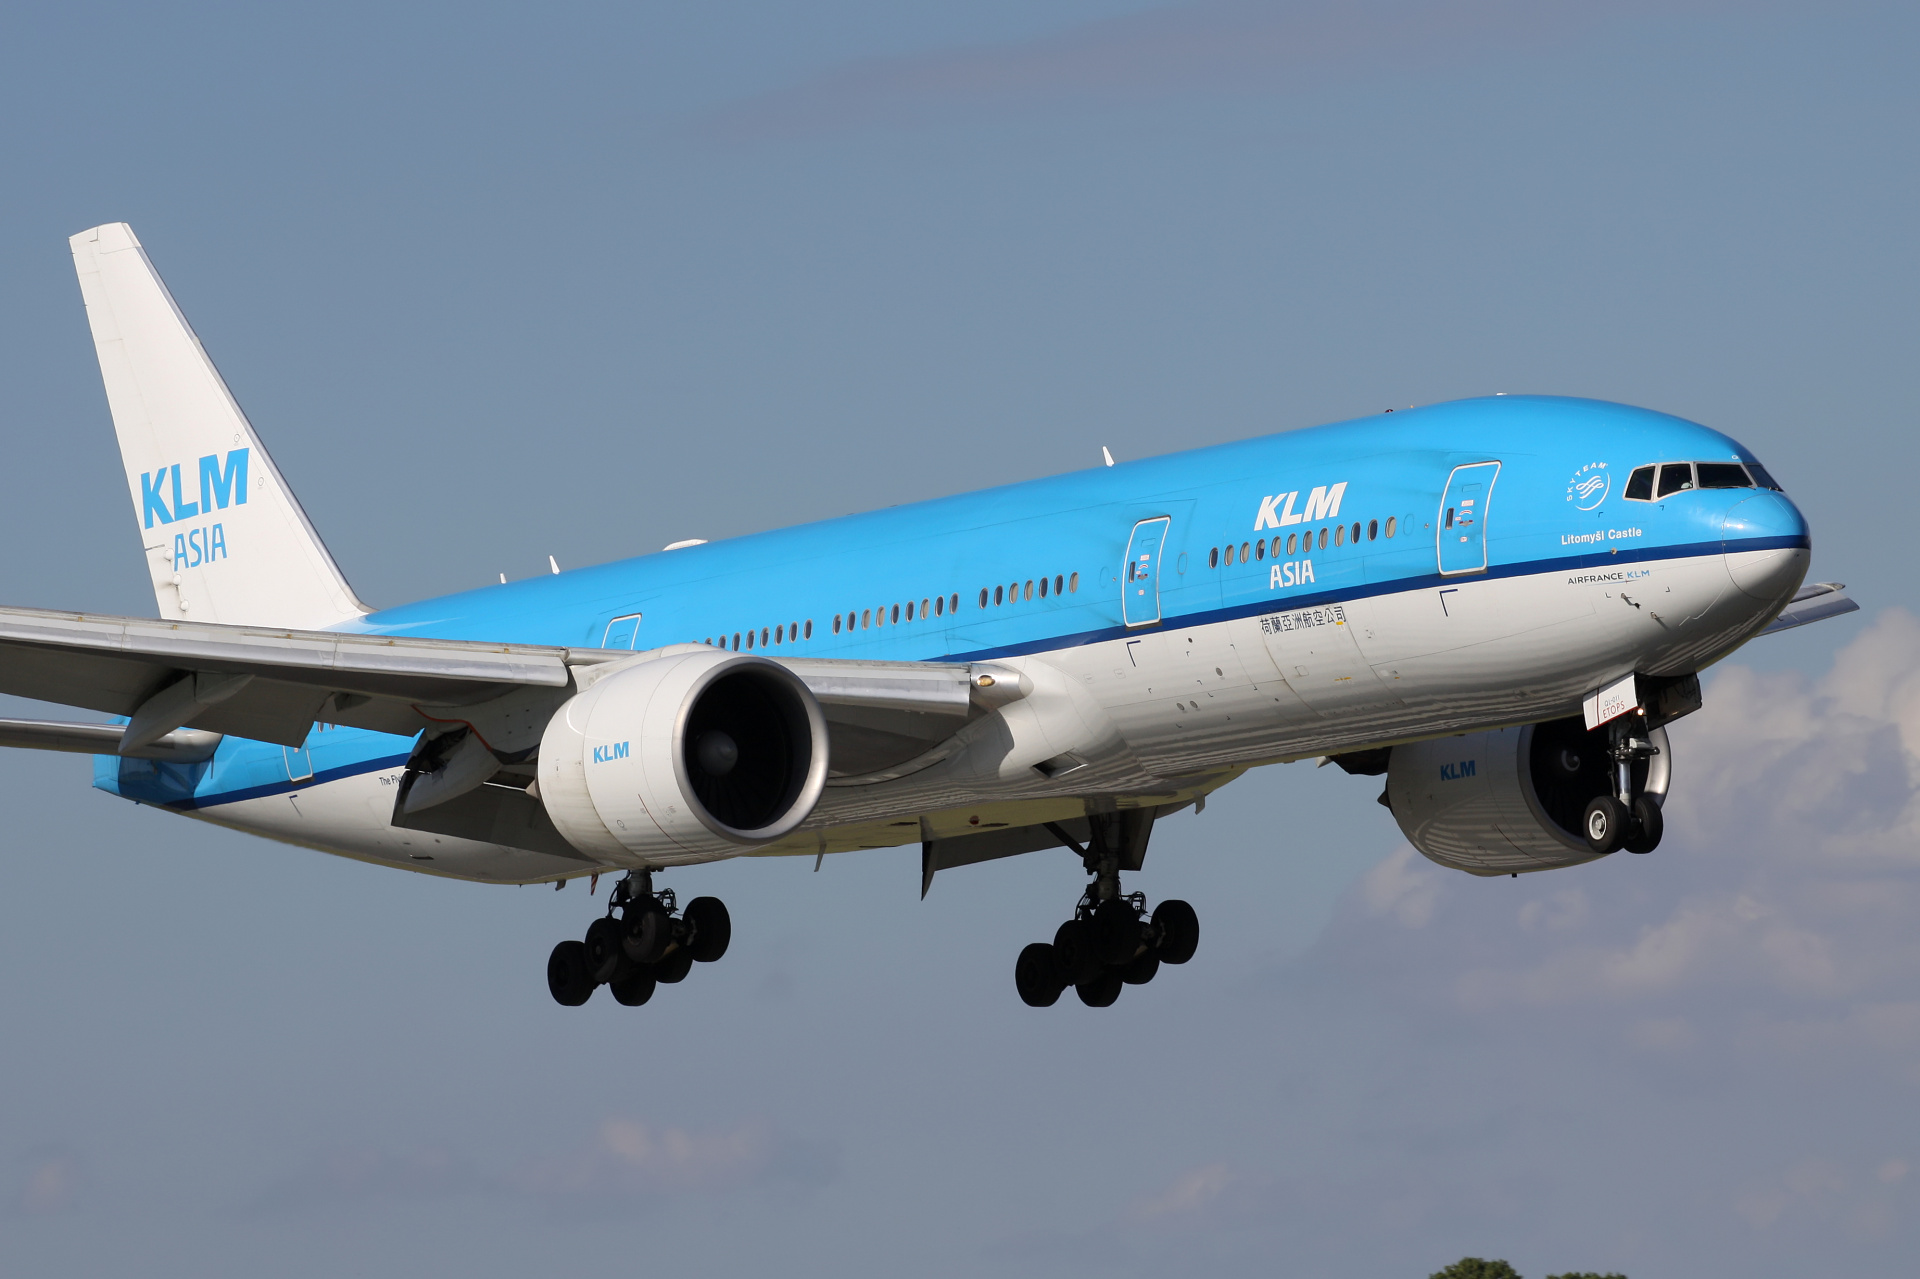 PH-BQL (KLM Asia livery) (Aircraft » Schiphol Spotting » Boeing 777-200/-ER » KLM Royal Dutch Airlines)